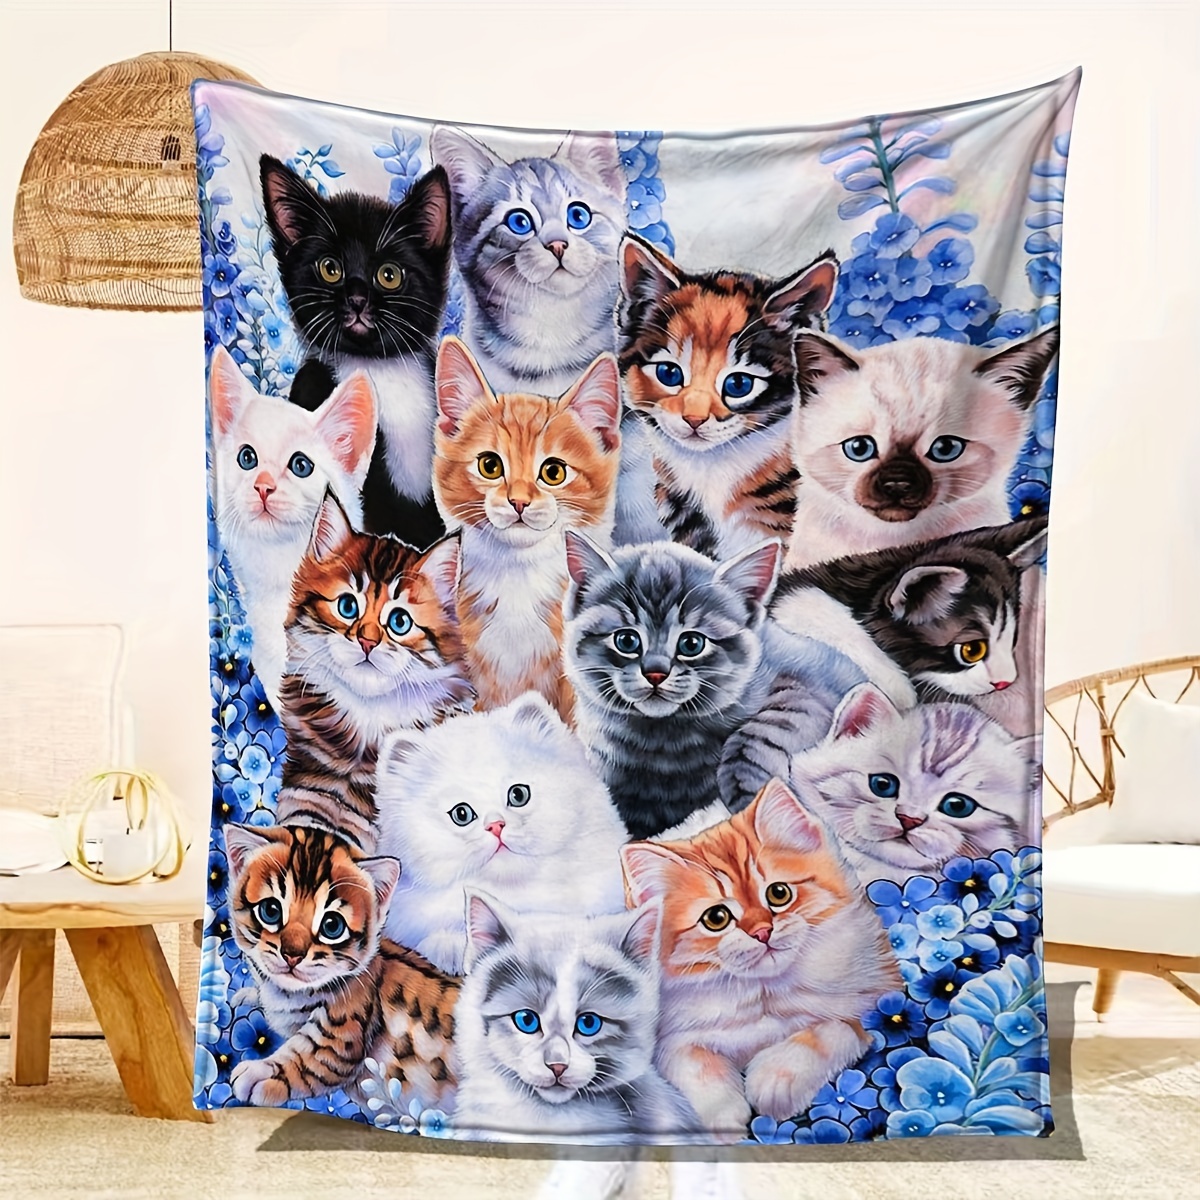 Super Soft Cat Blanket